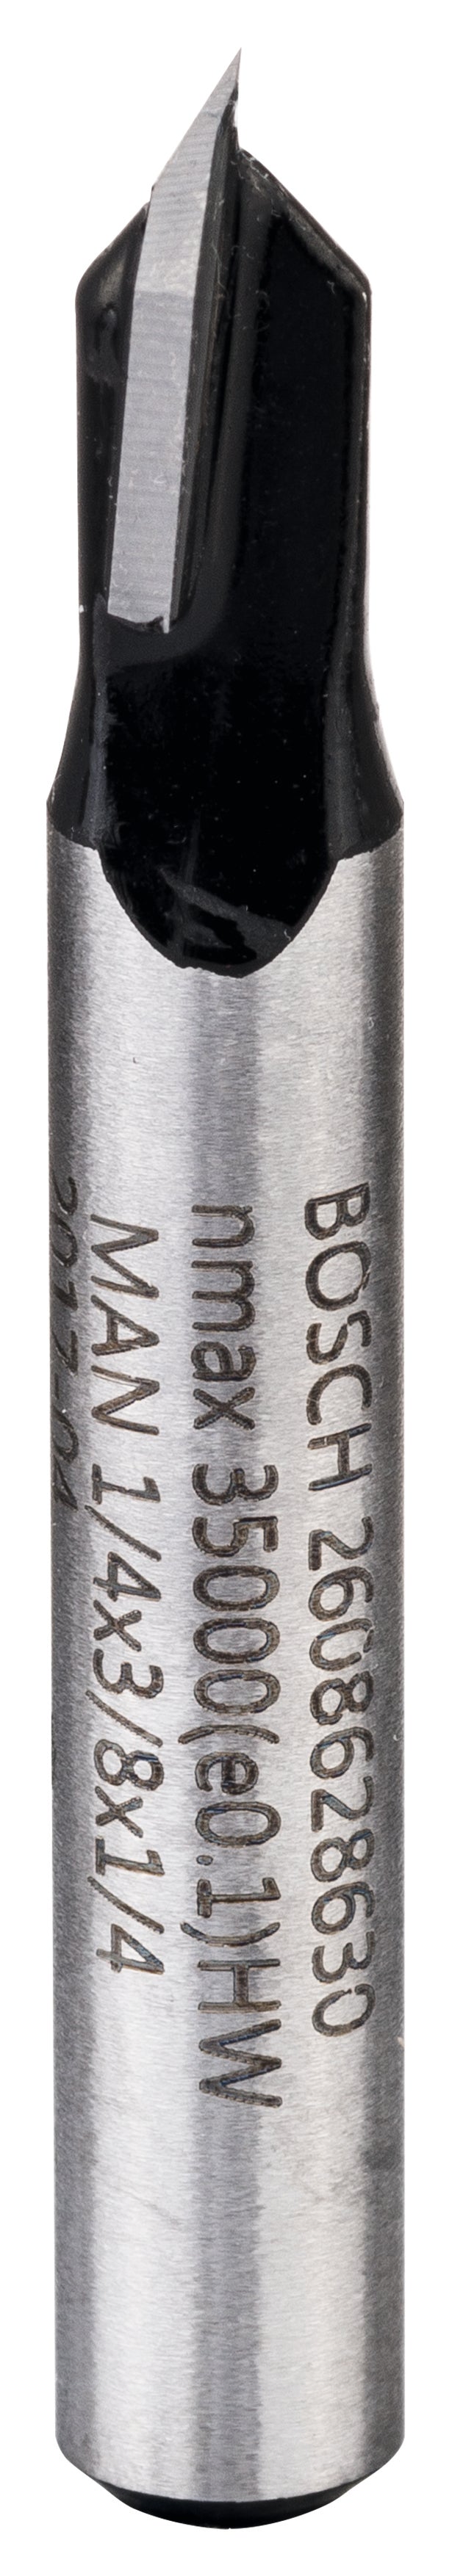 Bosch Professional V-Groove Bit - 90°, 1/4" Shank, L9.5mm, D6.3mm